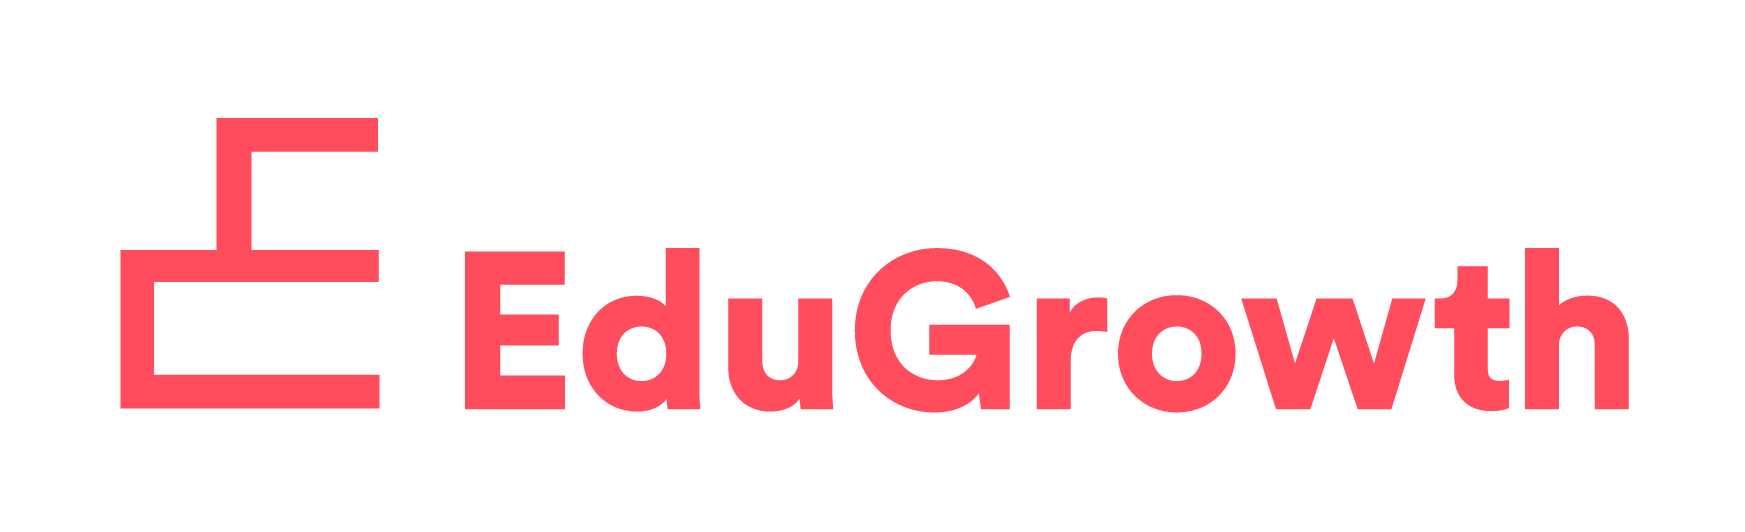 edugrowth logo